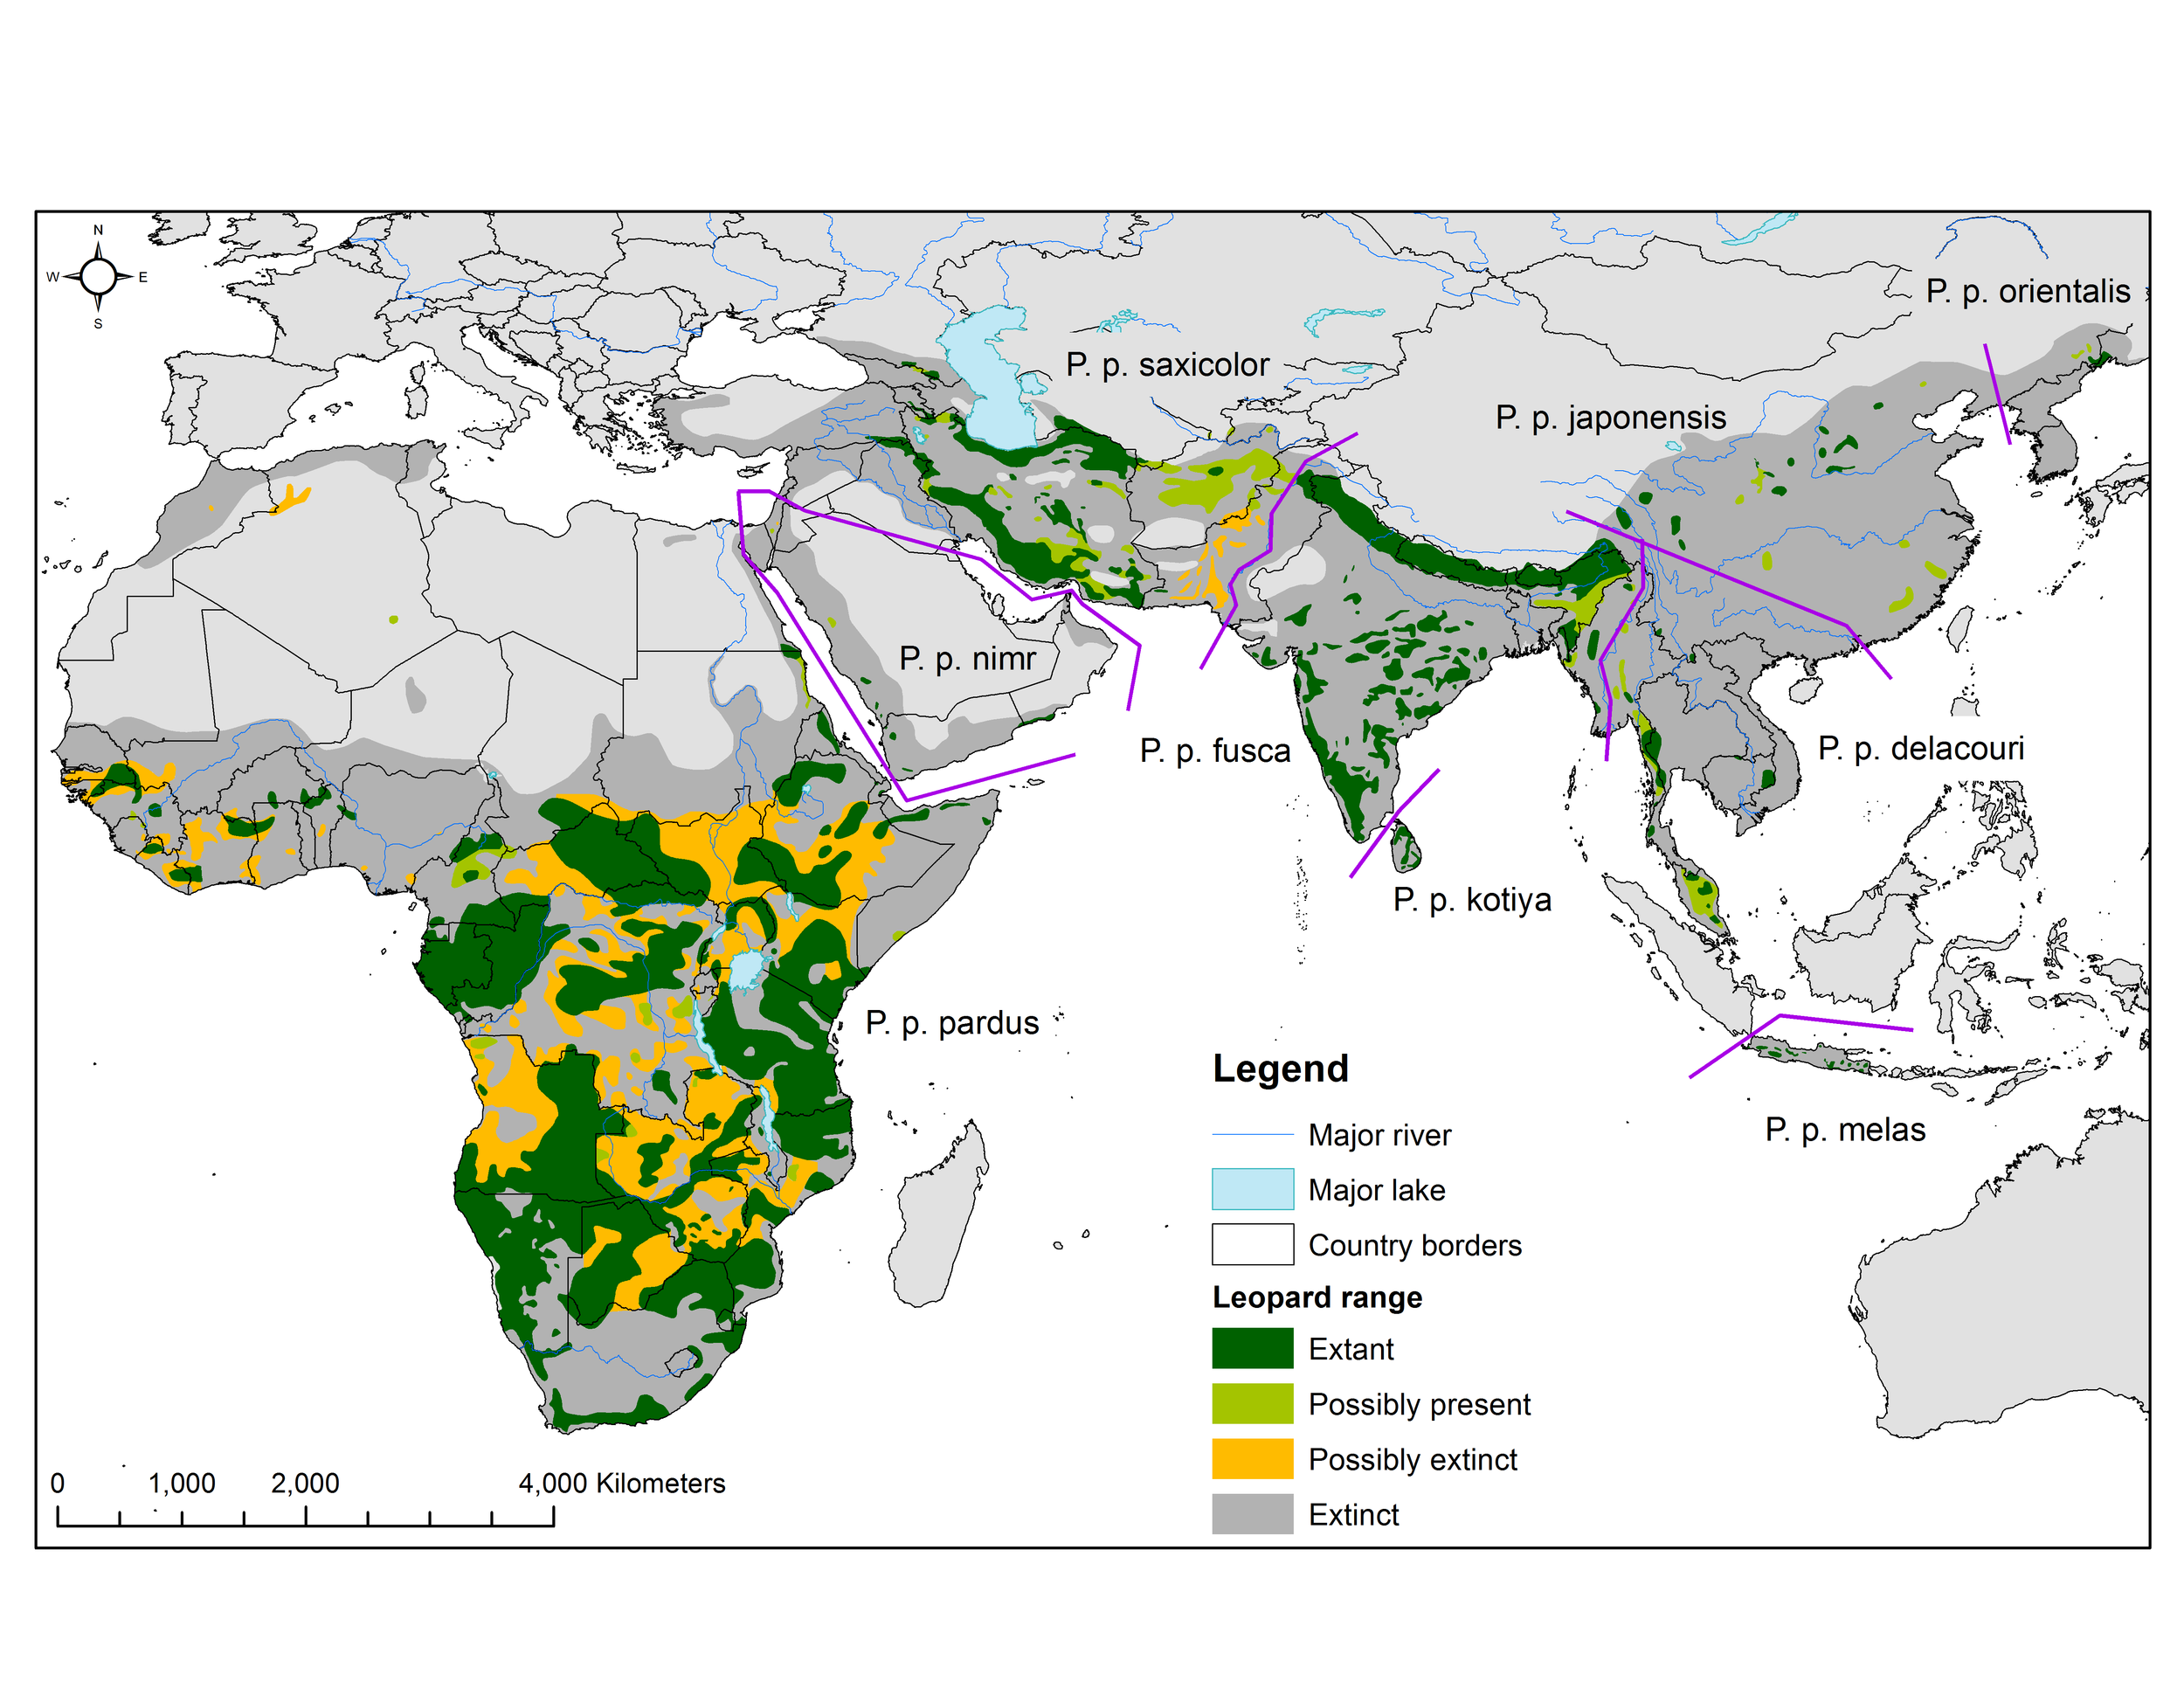 Leopard subspecies ranges. Taken from Jacobsen et al. 2016, Leopard (Panthera pardus) status, distribution, and the research efforts across its range. doi:10.7717/peerj.1974